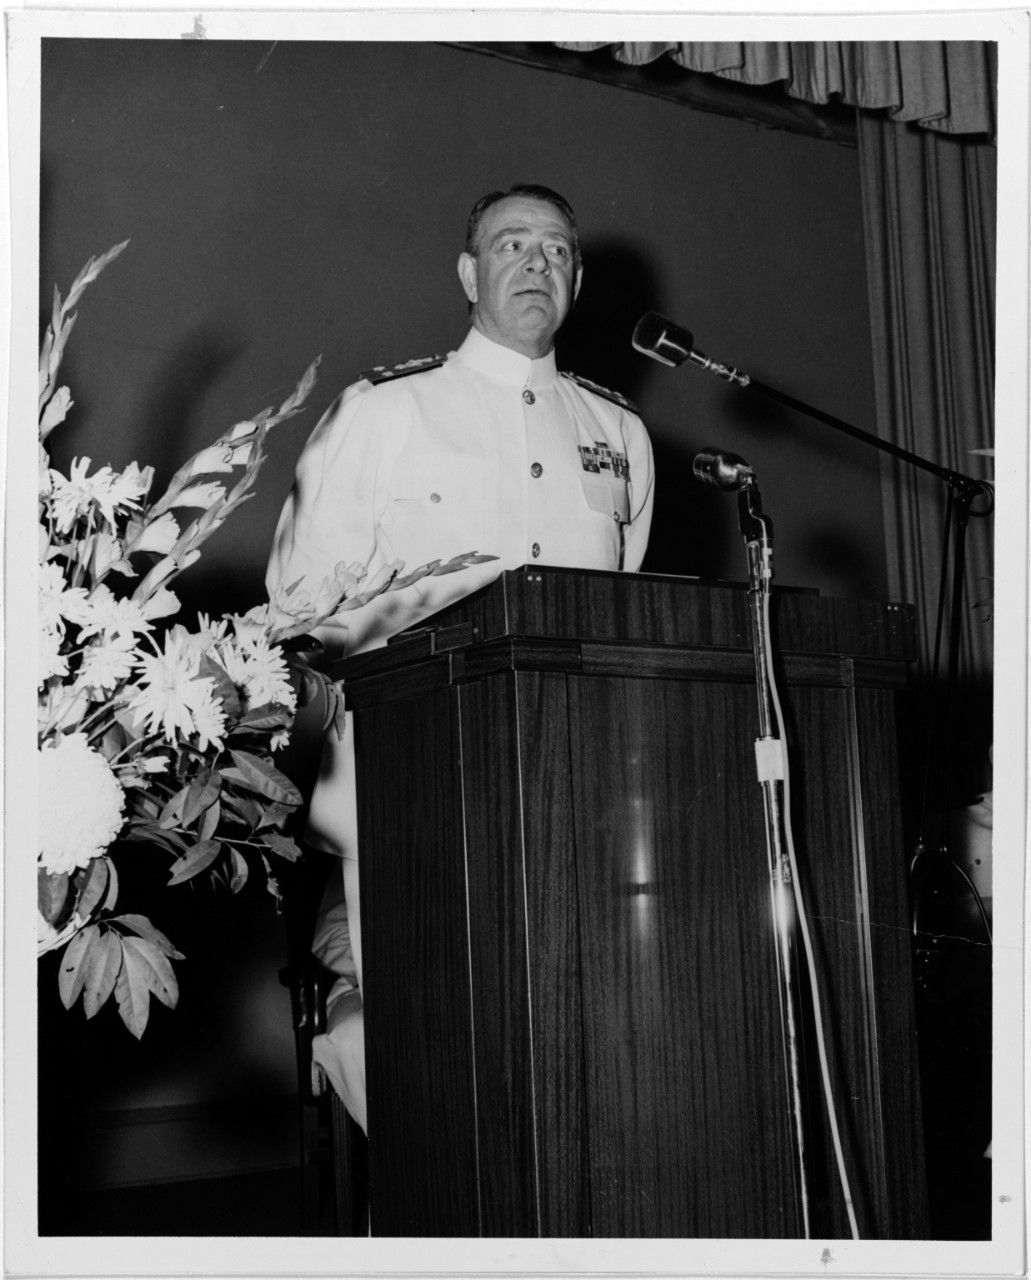 Vice Admiral James L. Holloway Jr., USN